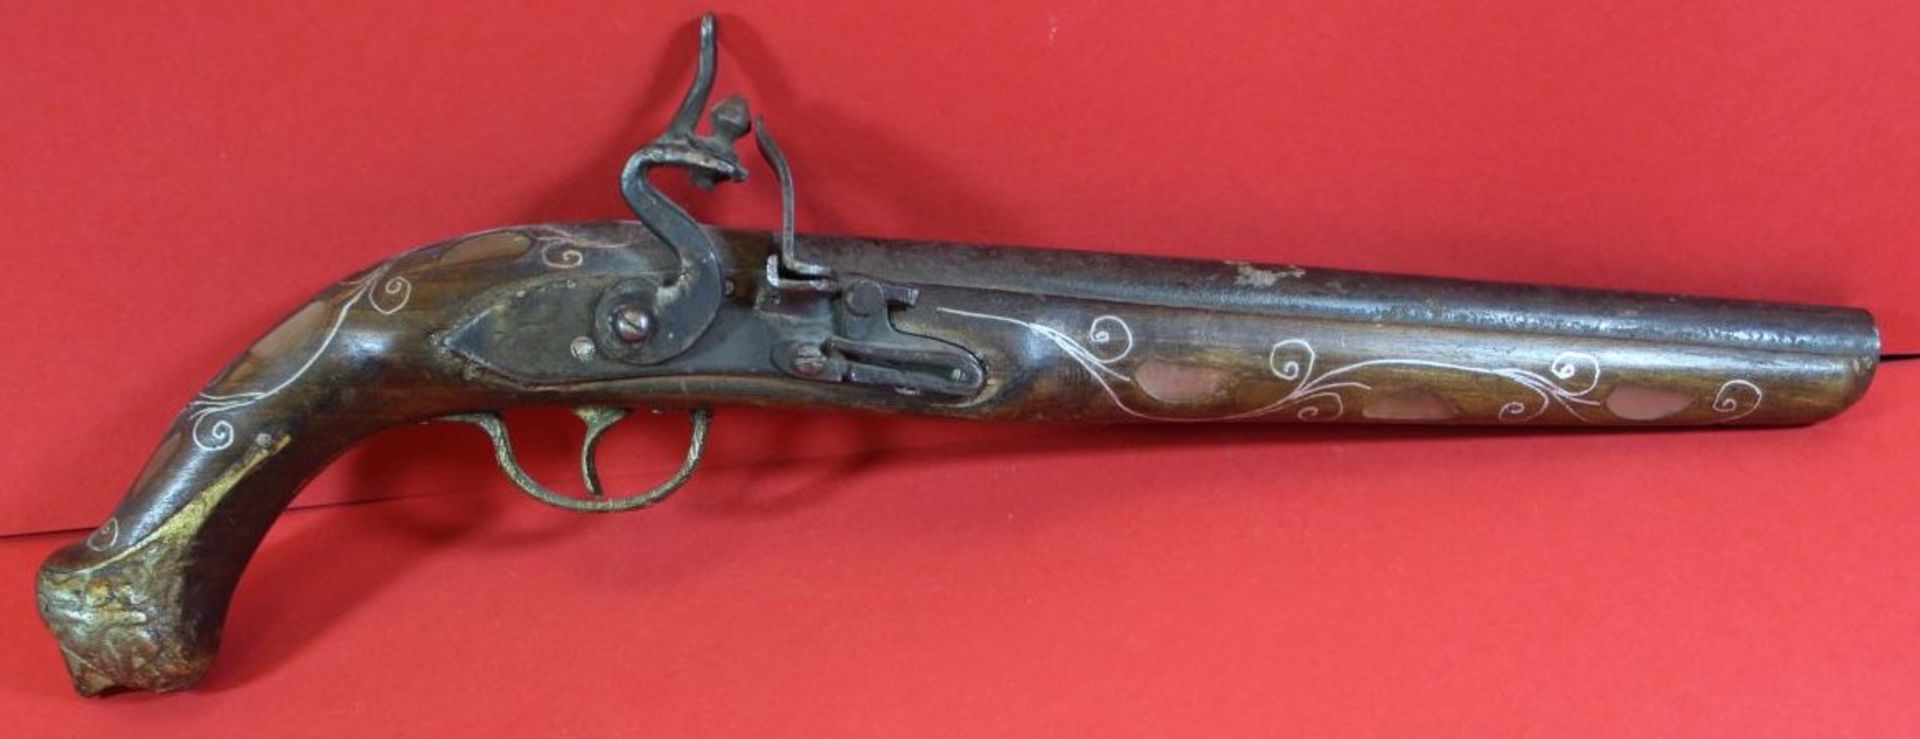 Steinschloss-Pistole   um 175f0, Messing und Perlmuttverzierungen, L-42 cm